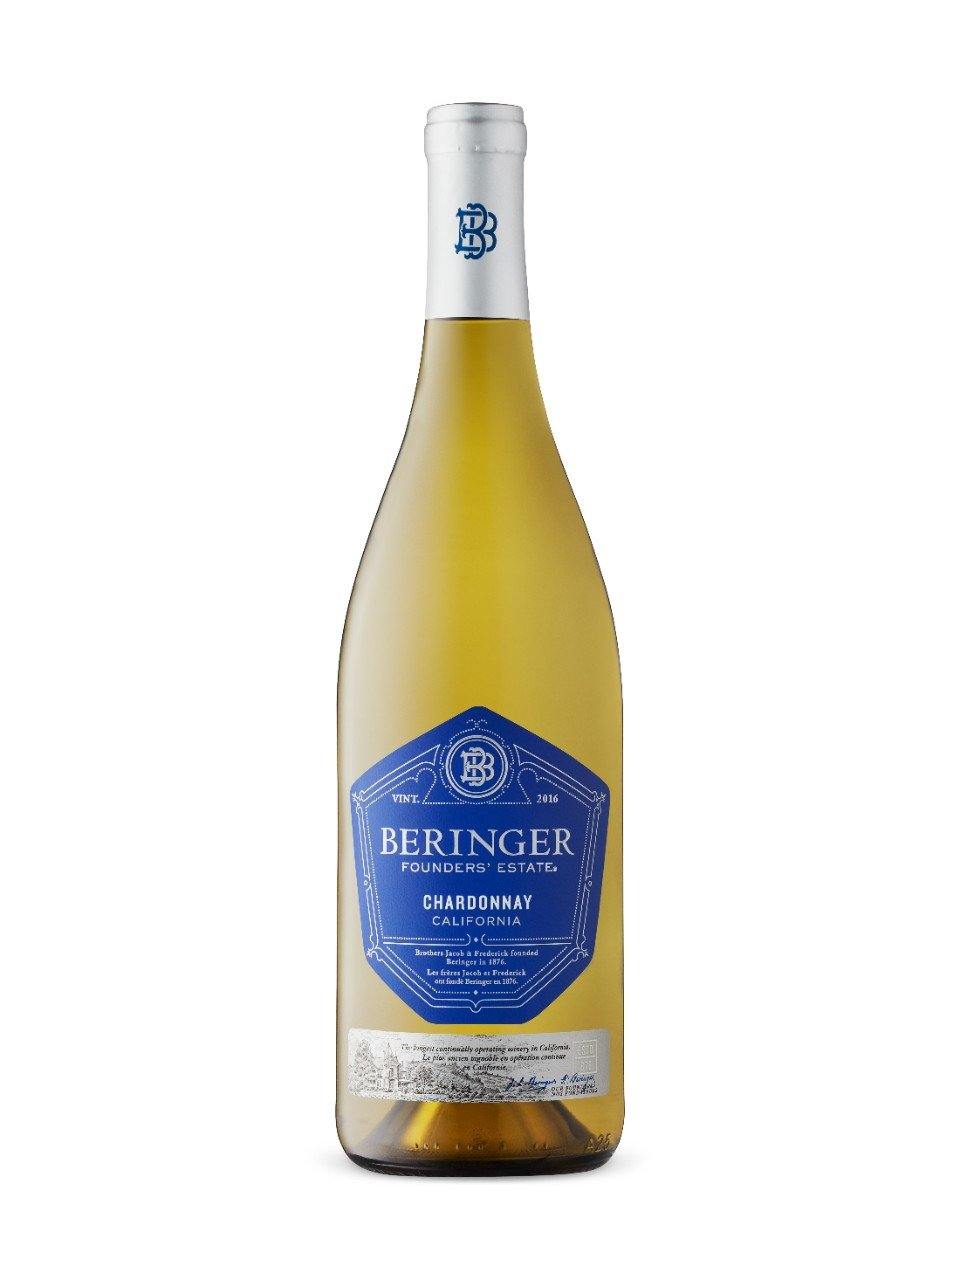 Beringer Founders' Estate Chardonnay 750 mL bottle - Speedy Booze